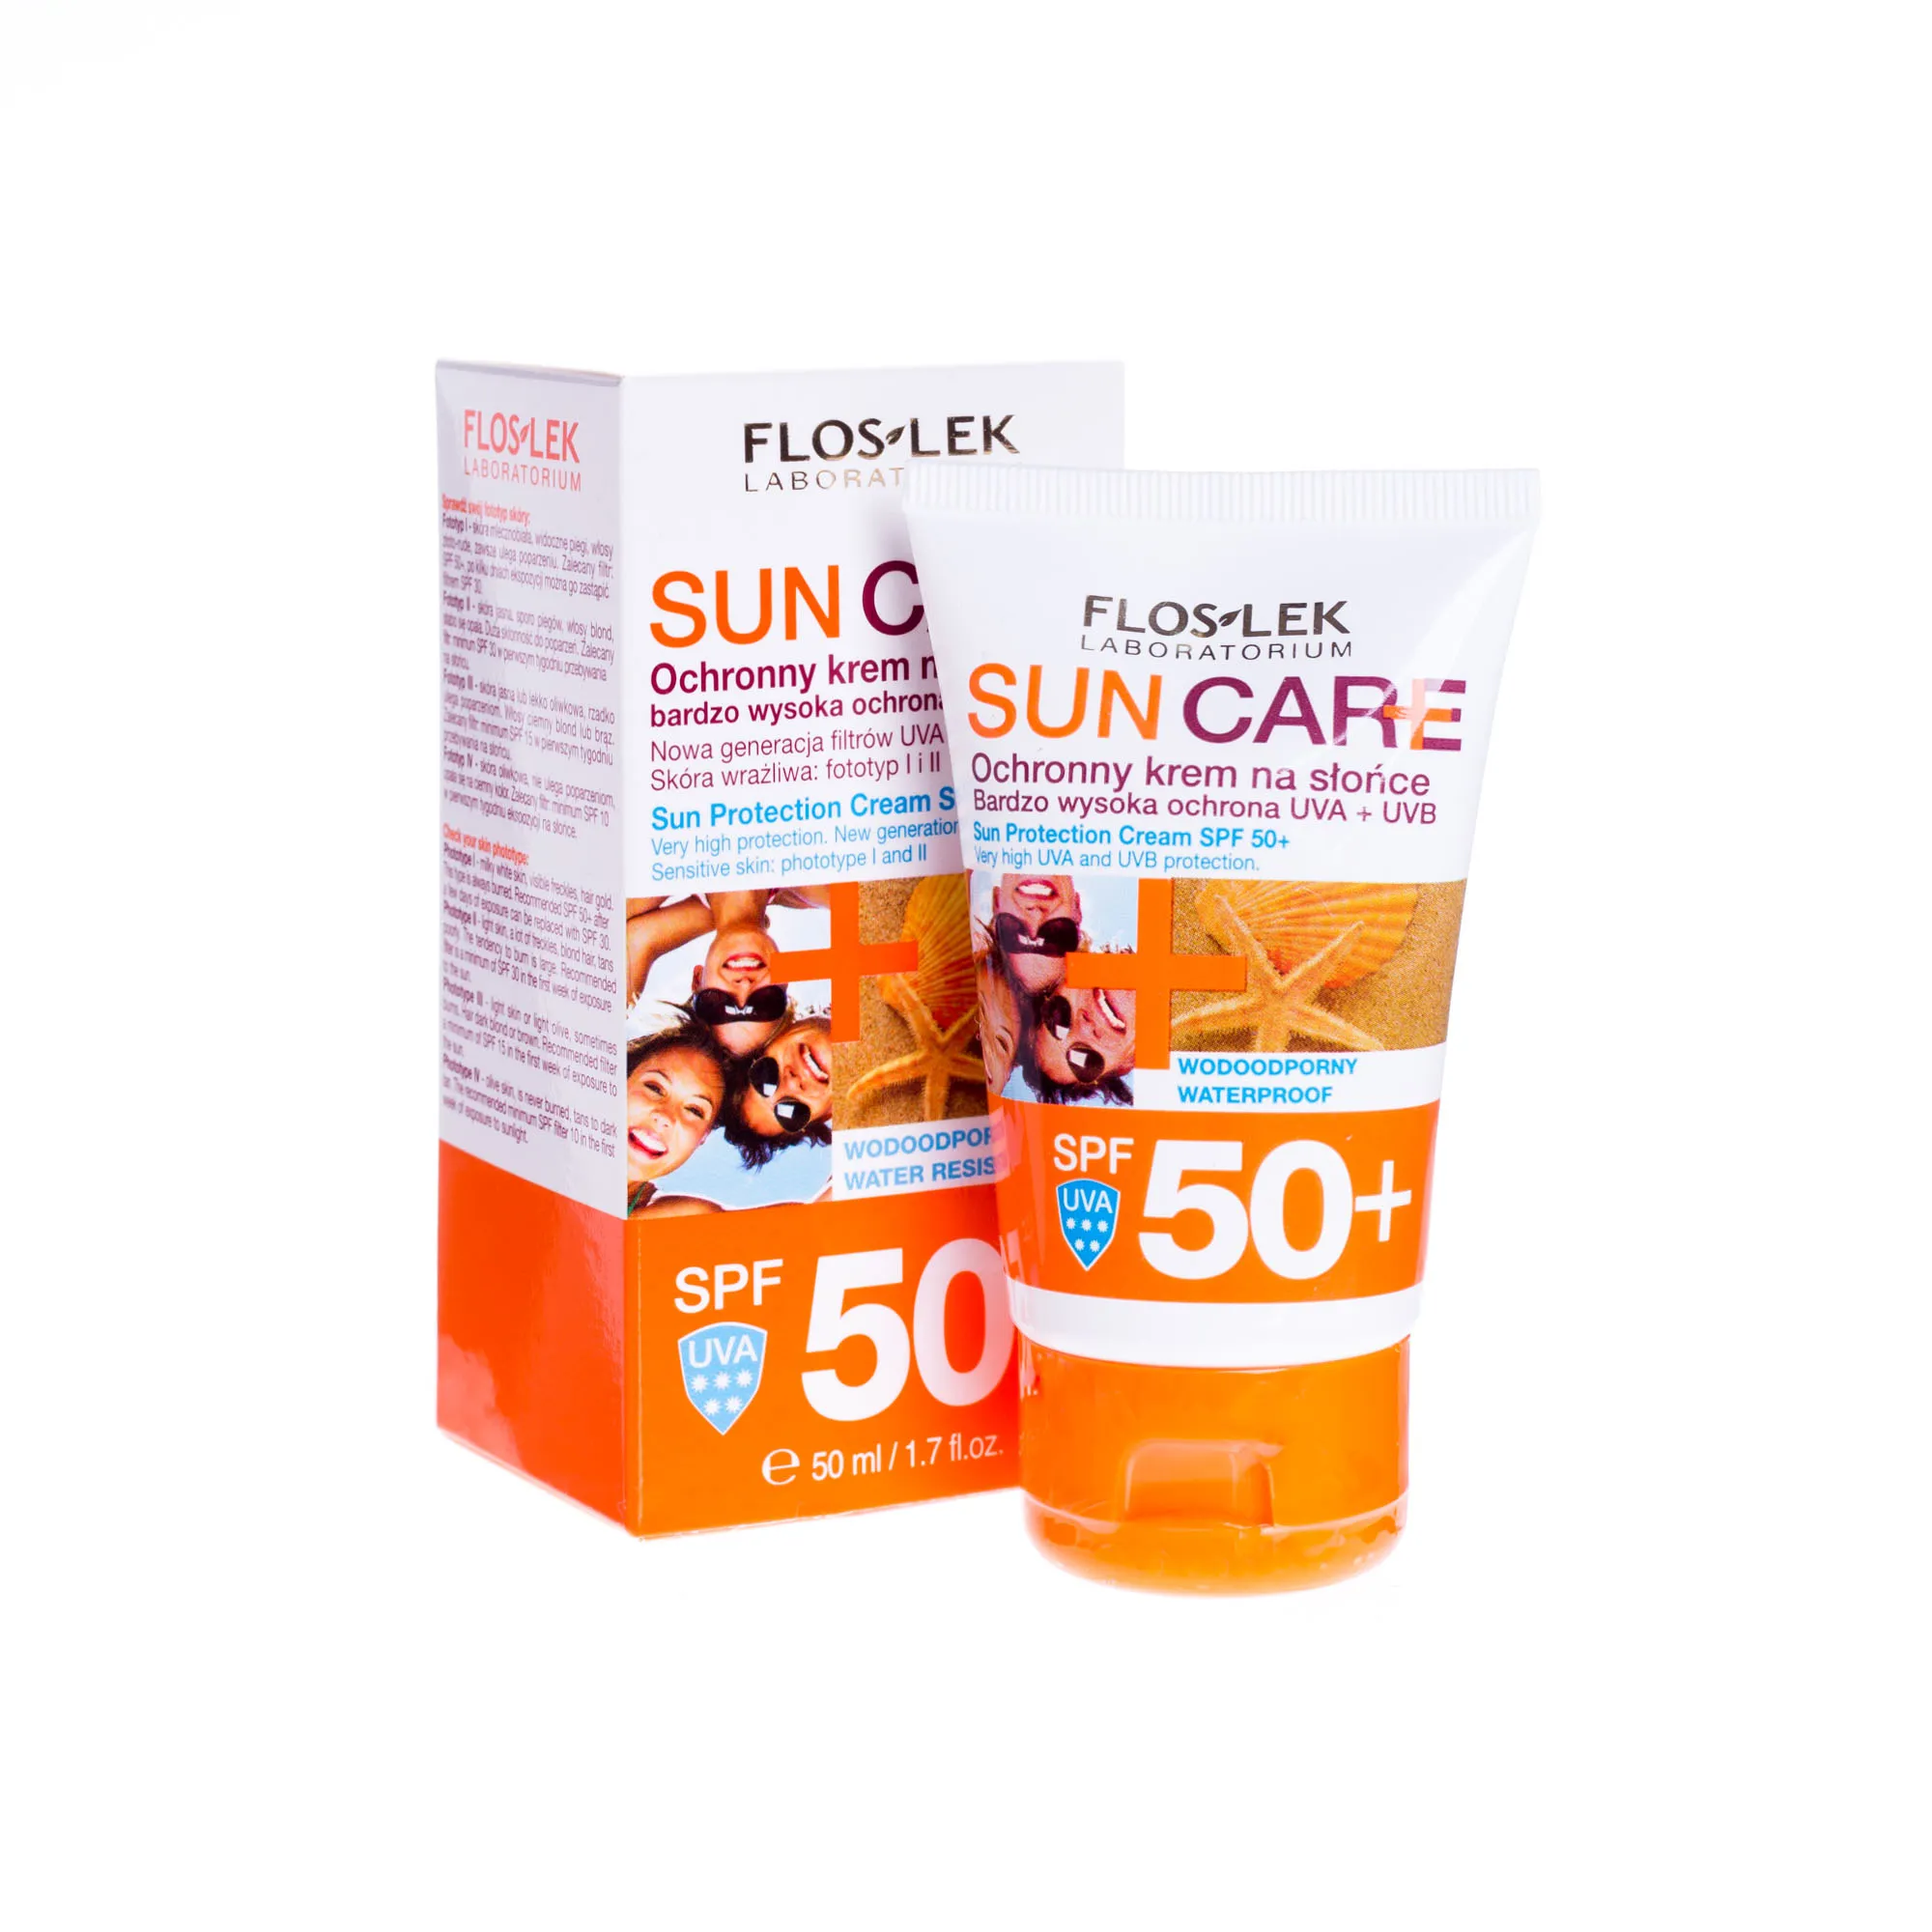 Flos Lek  Sun Care, ochronny krem na słońce, SPF 50+ / 50ml